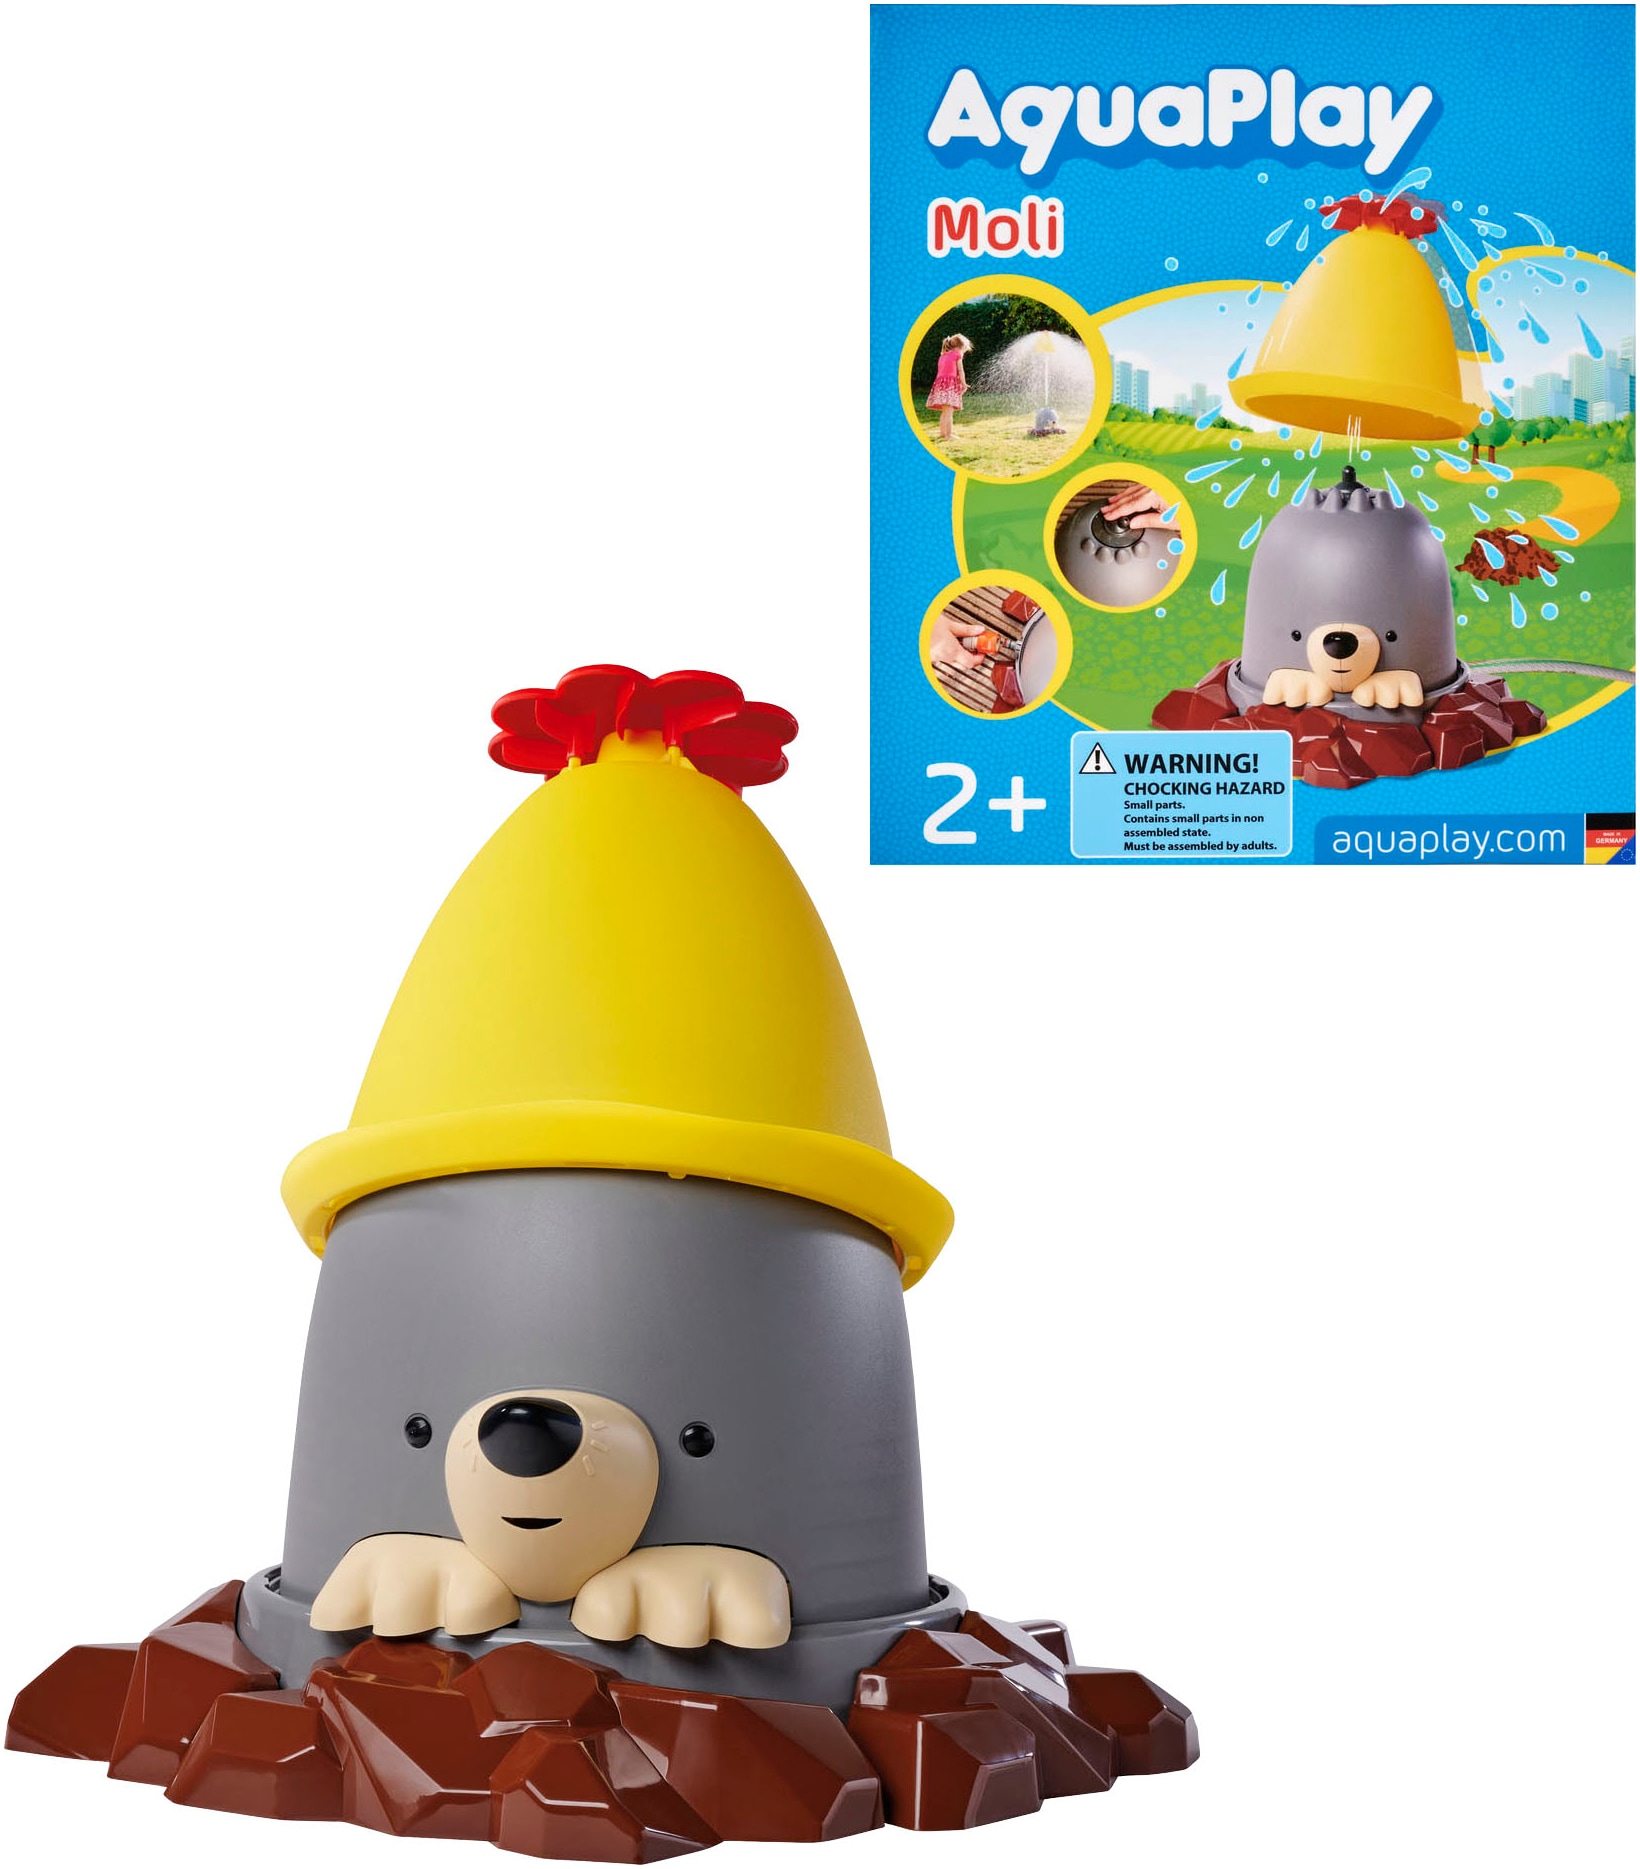 Aquaplay Spiel-Wassersprenkler »AquaPlay Moli«, Made in Germany